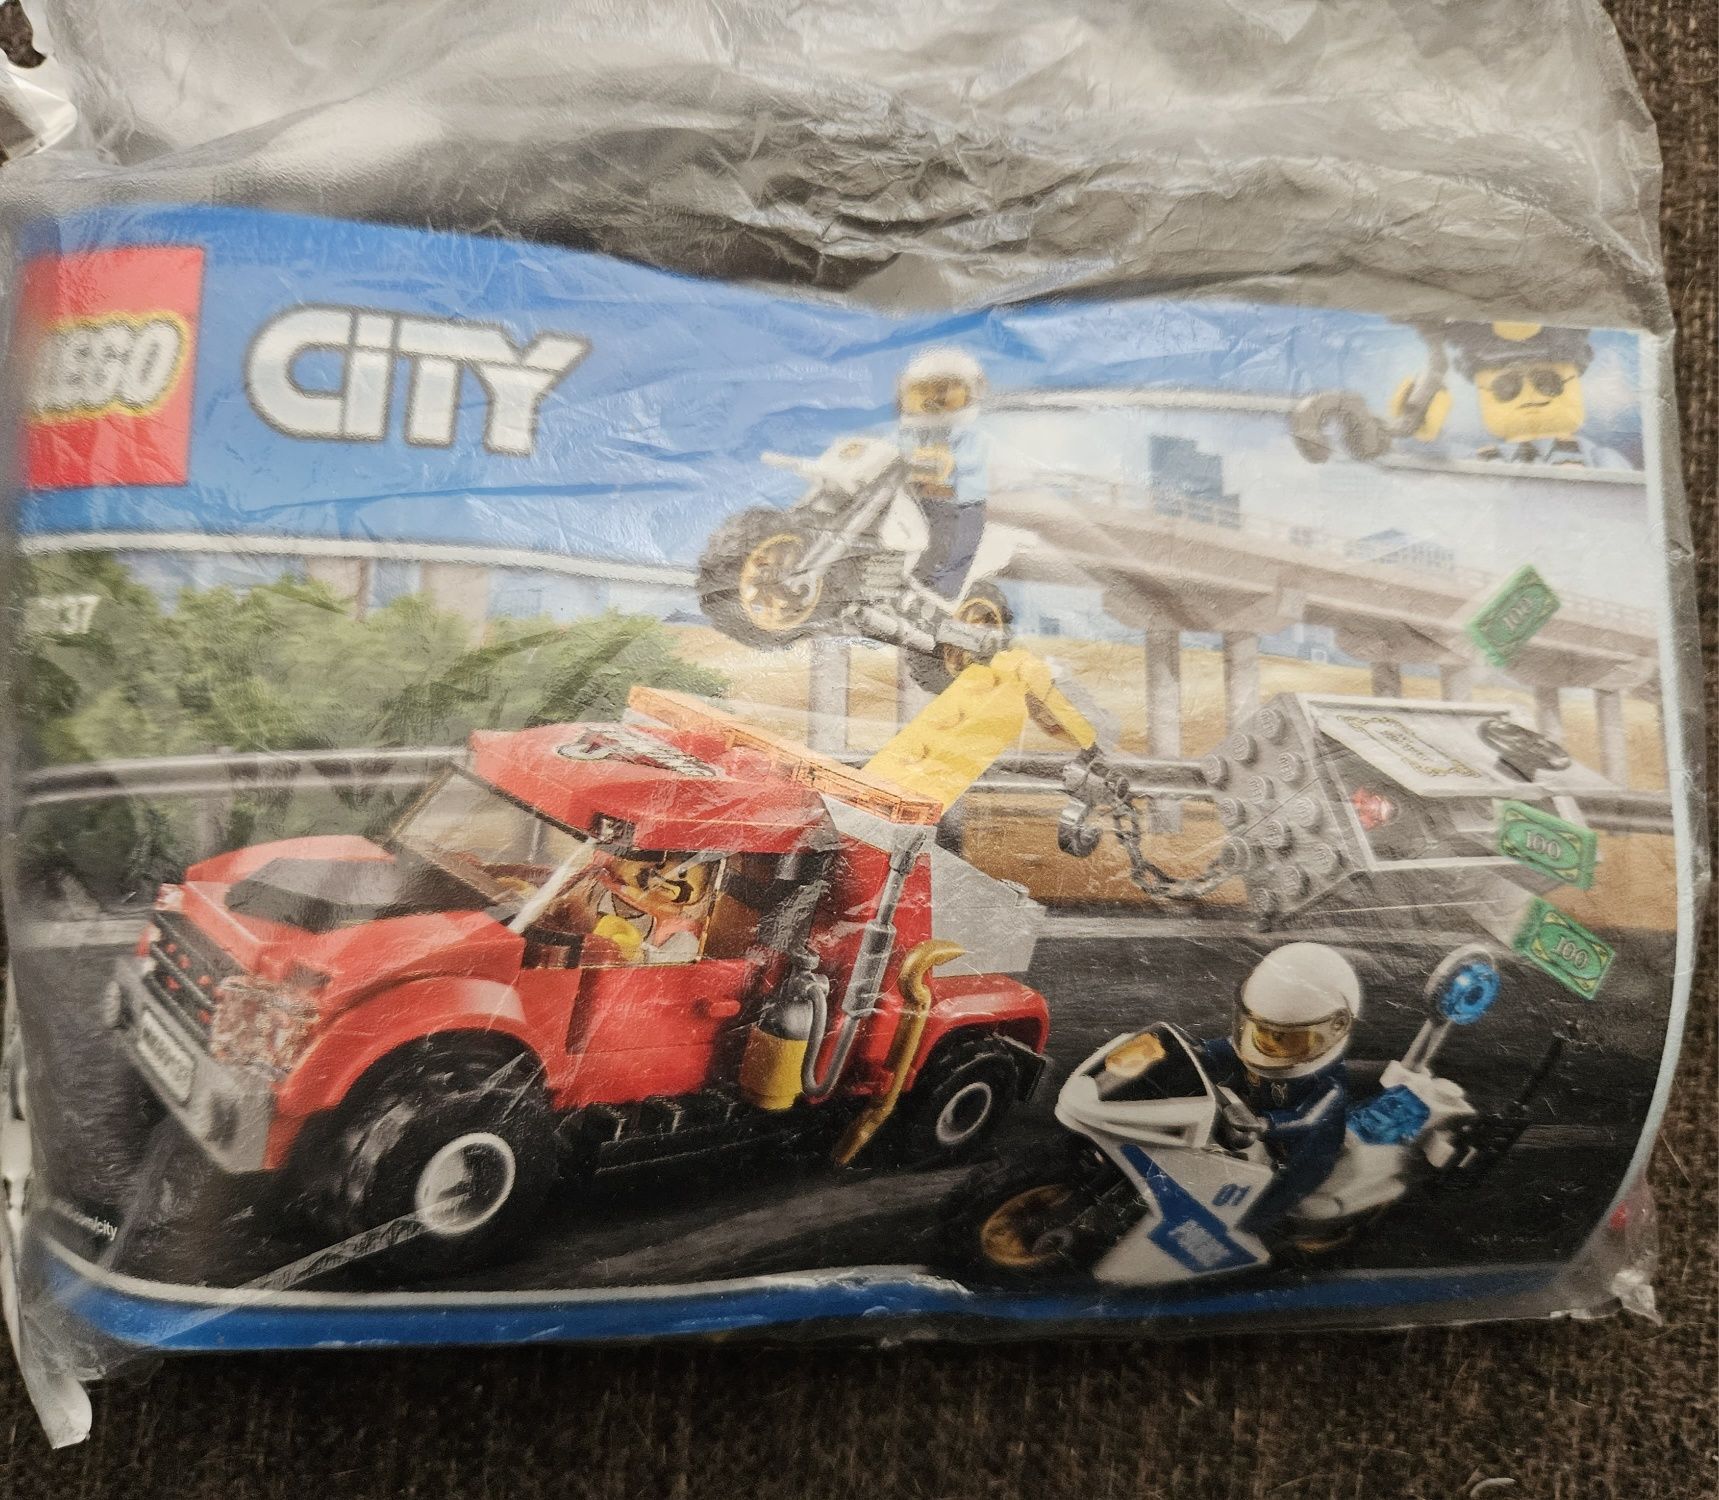 Lego city police 60137